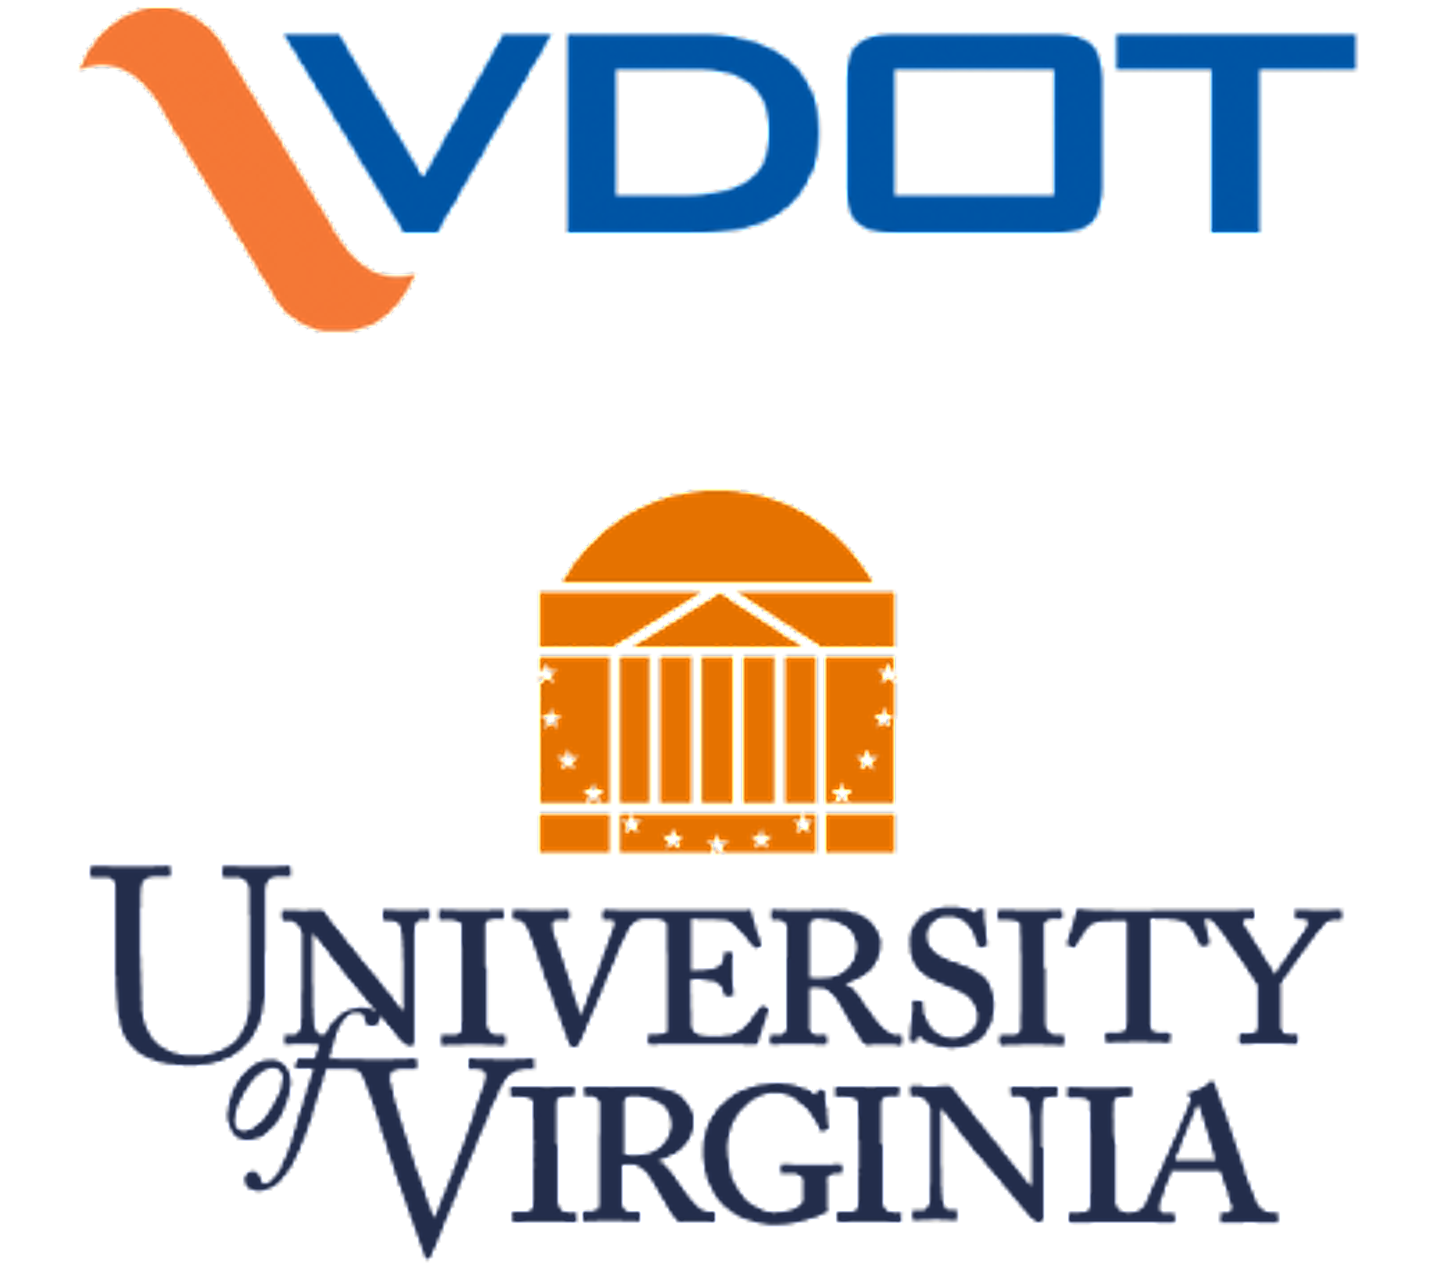 VDOT and University of Virginia logos